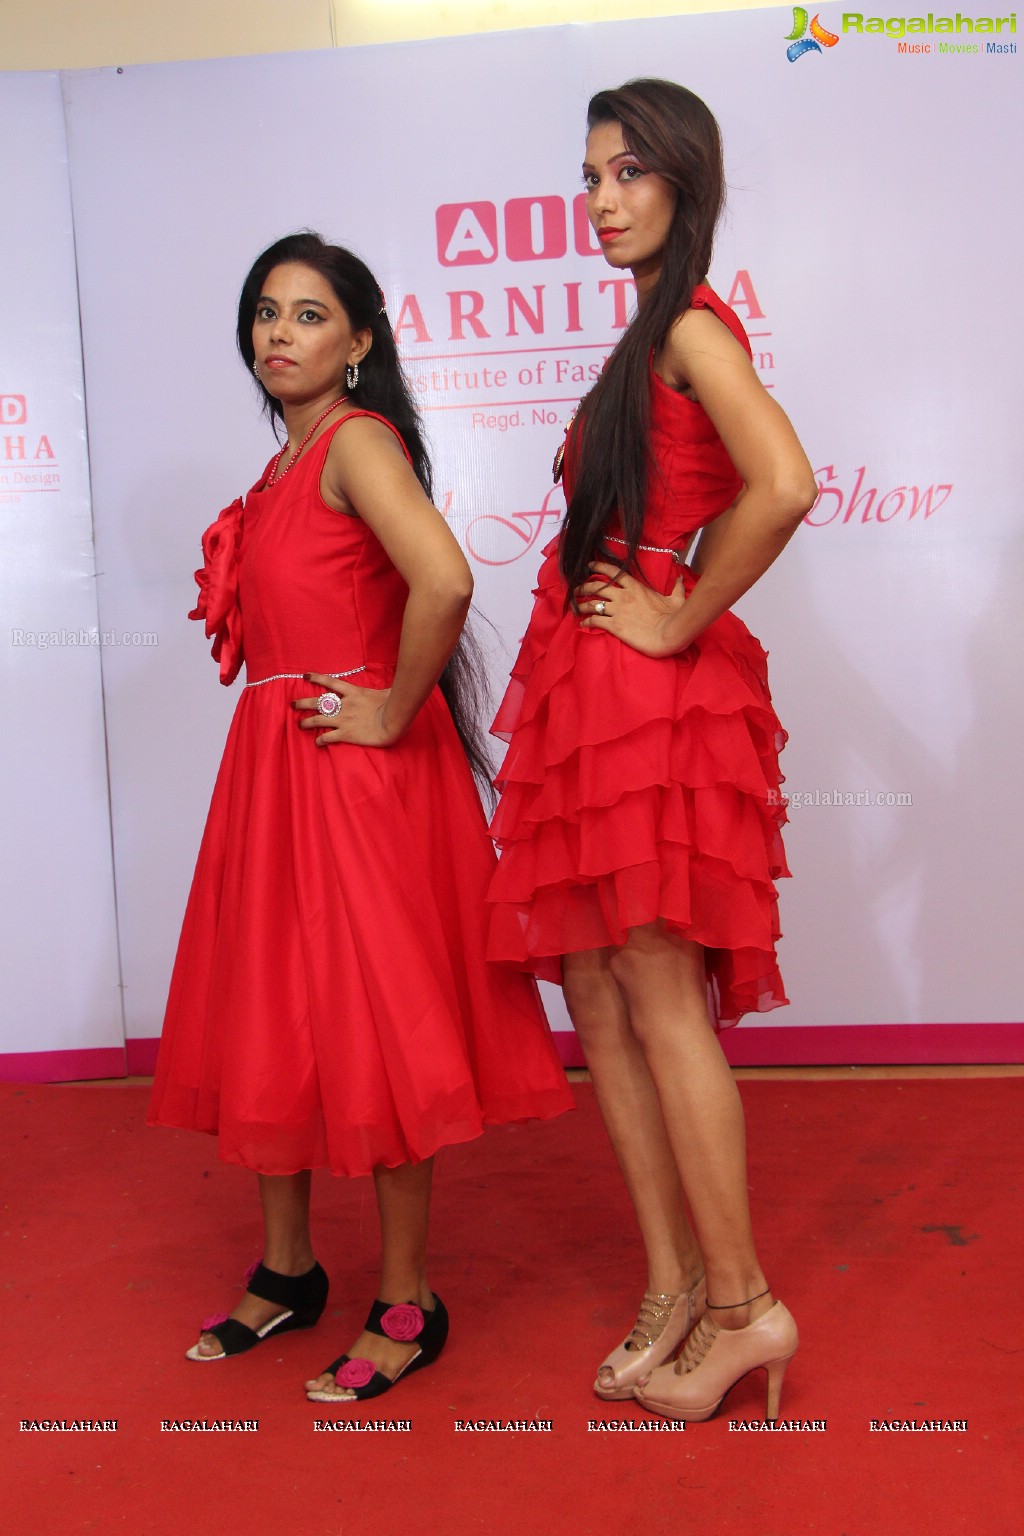 Arnitha Institute of Fashion Design Annual Fashion Show 2016, Hyderabad